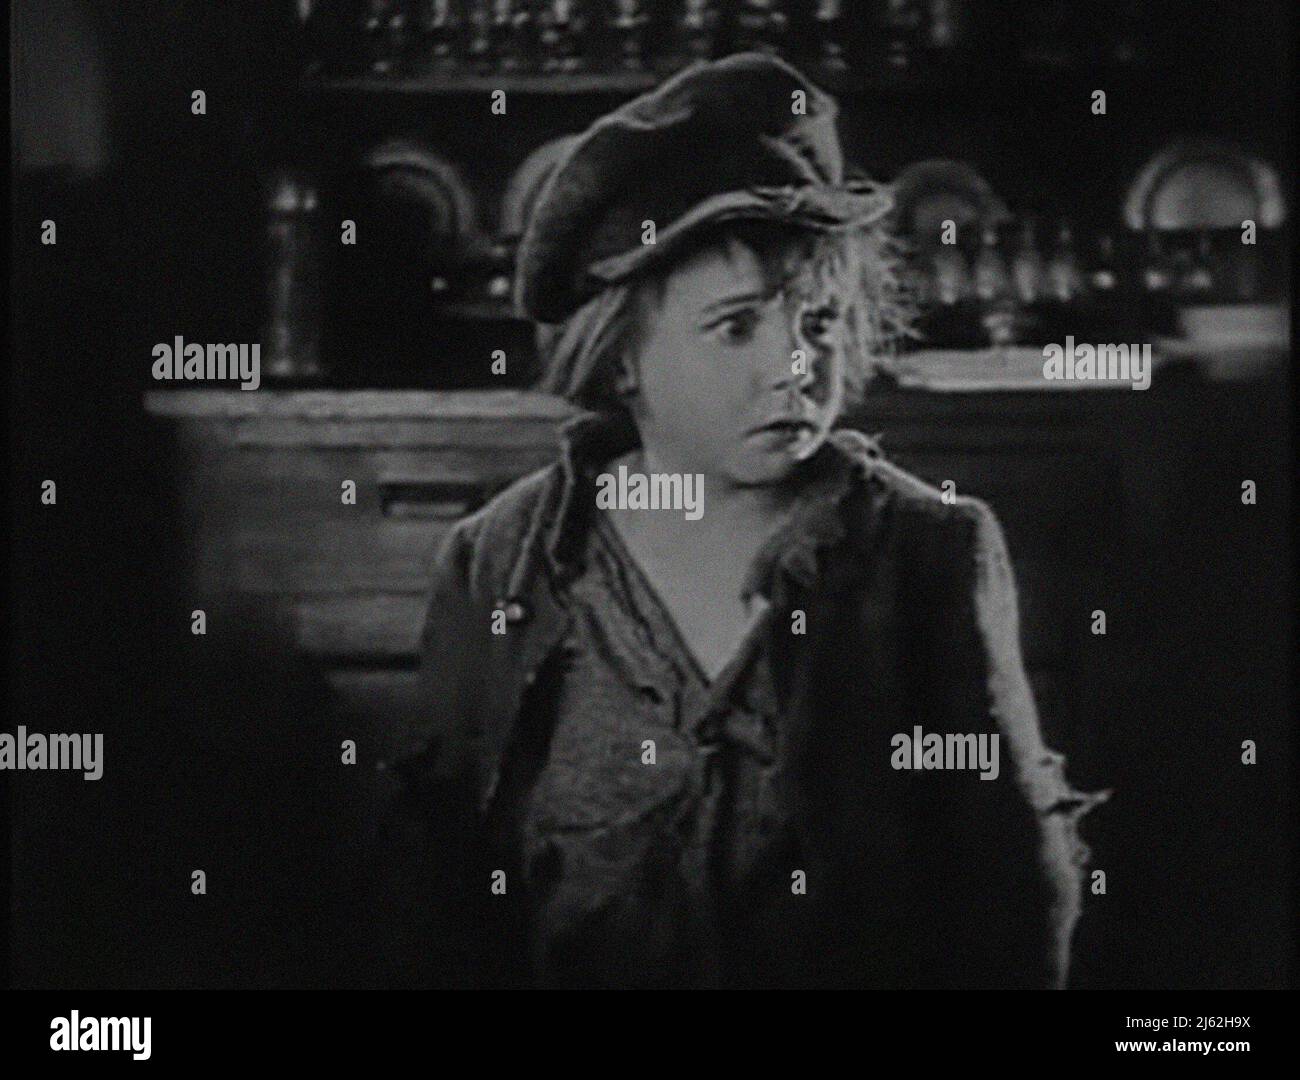 Oliver Twist 1922 vintage movie still Stock Photo - Alamy